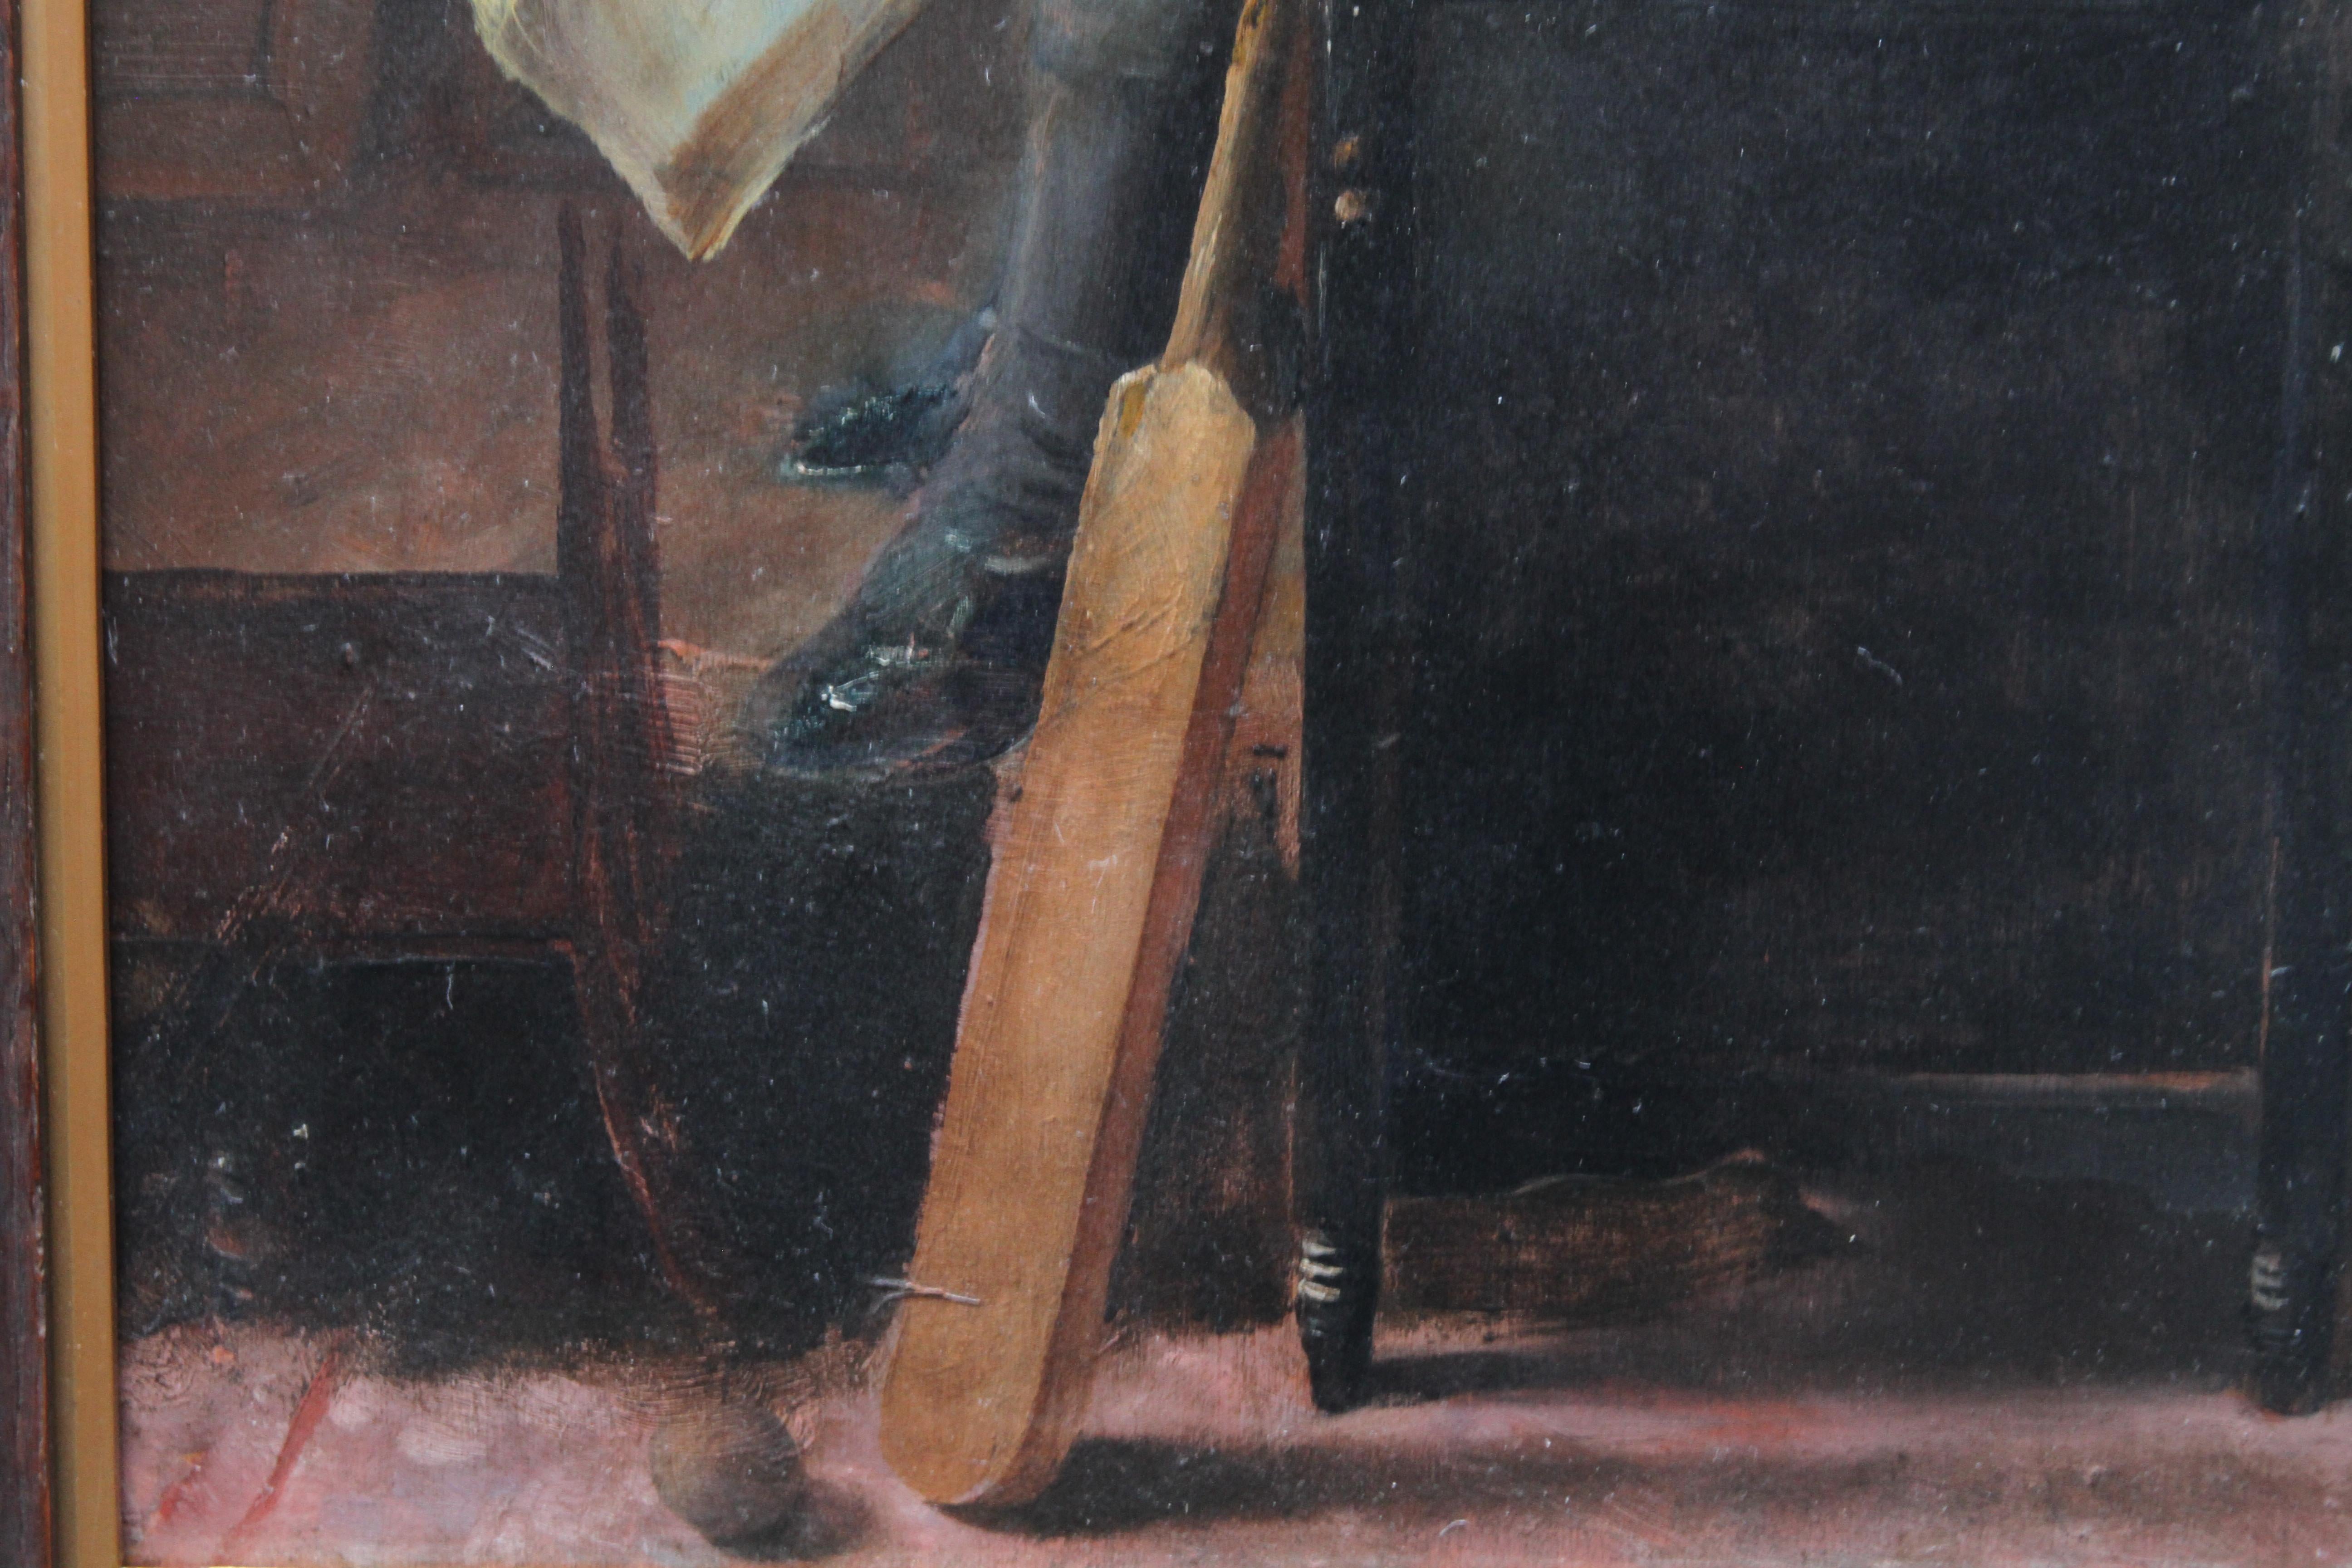 Schoolboy with Cricket Bat - British Slade School art 30's portrait oil painting - Black Portrait Painting by Unknown